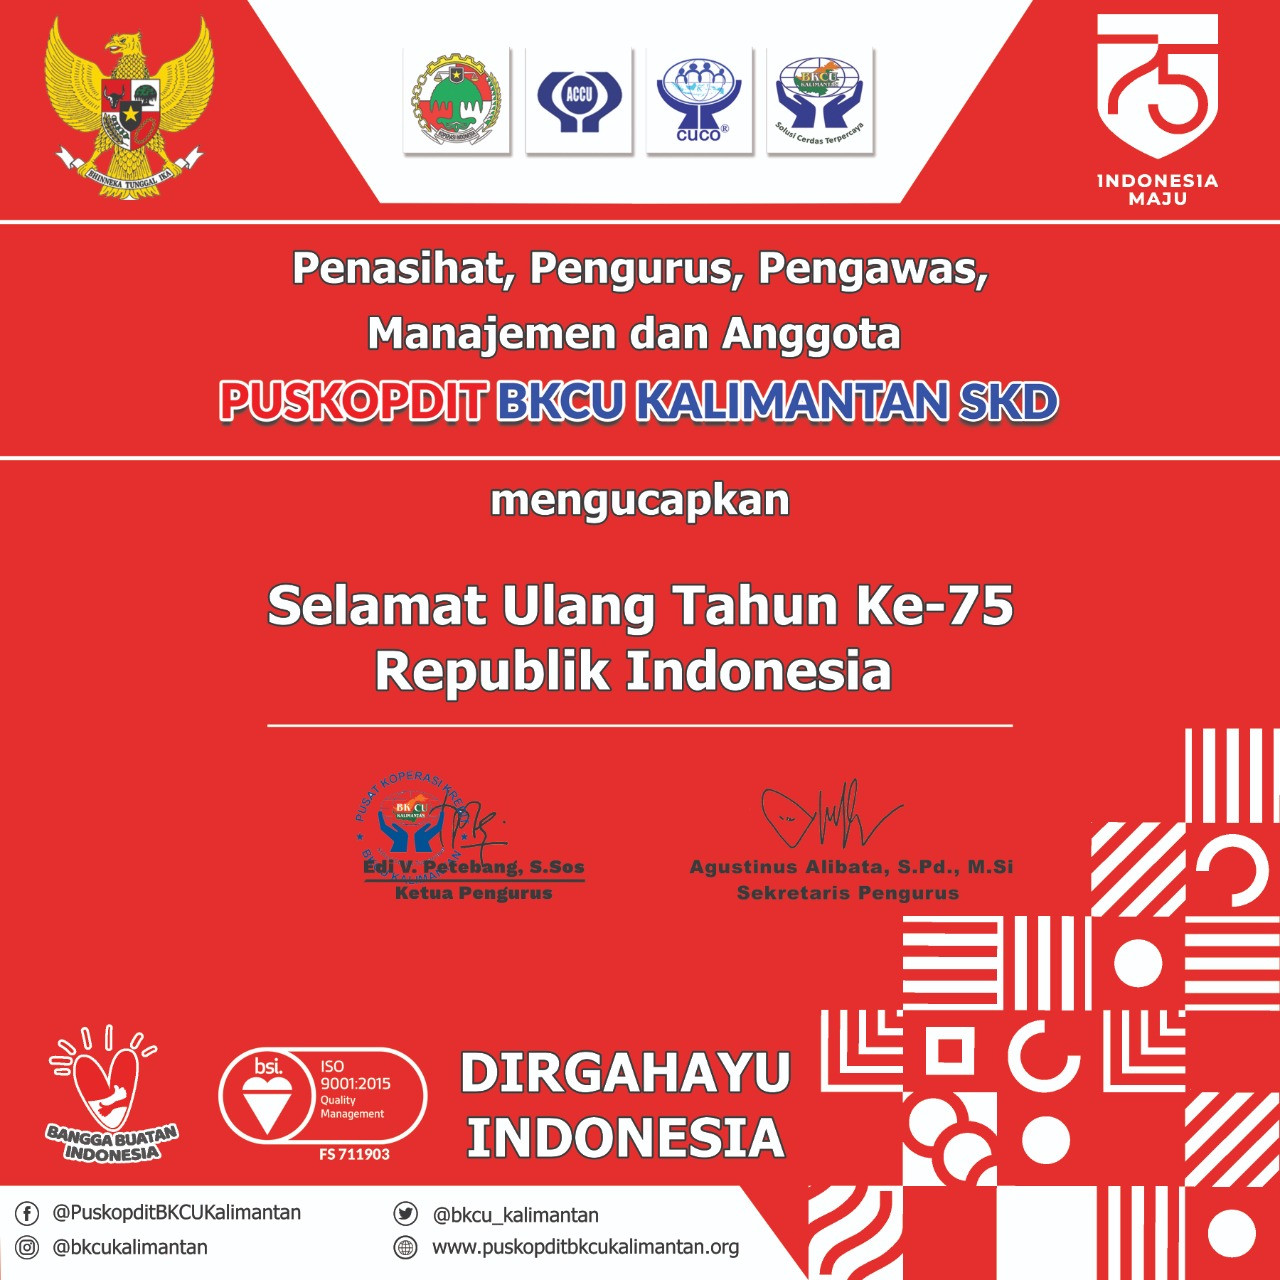 Selamat ulang tahun ke 75 Republik Indonesia